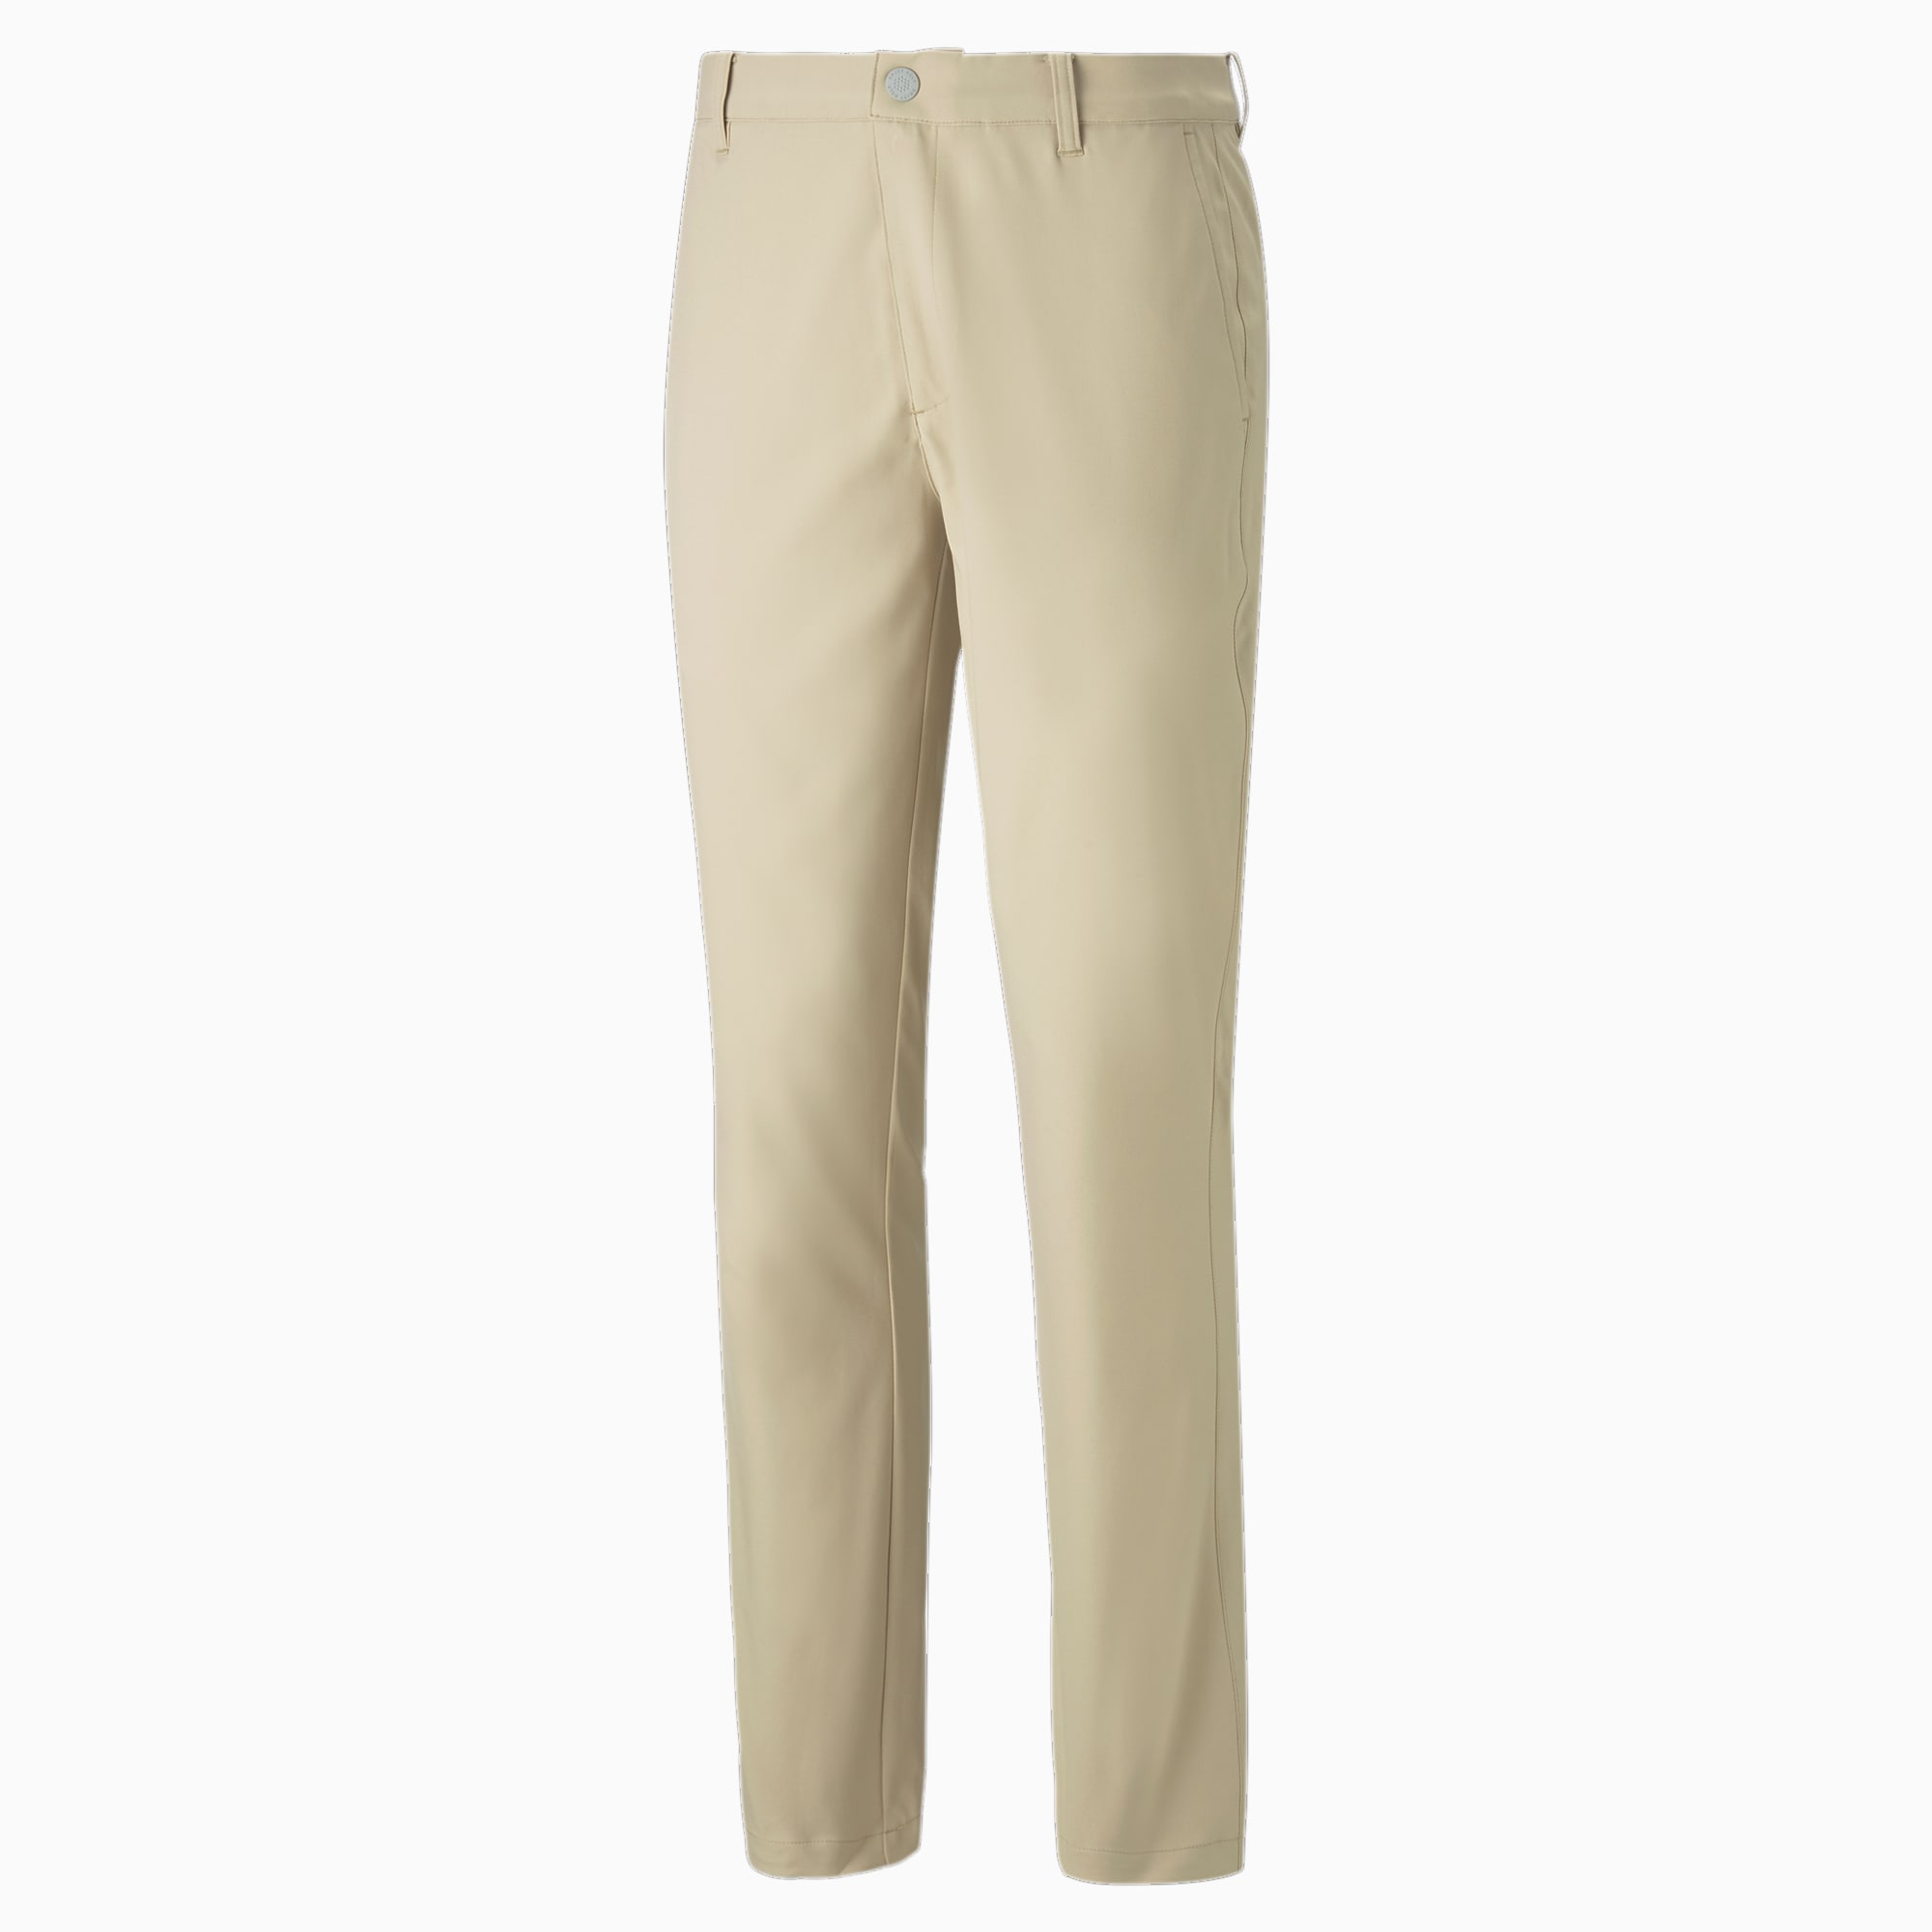 PUMA Dealer Tailored Golf Pants Men, Alabaster, Size 36/30, Clothing